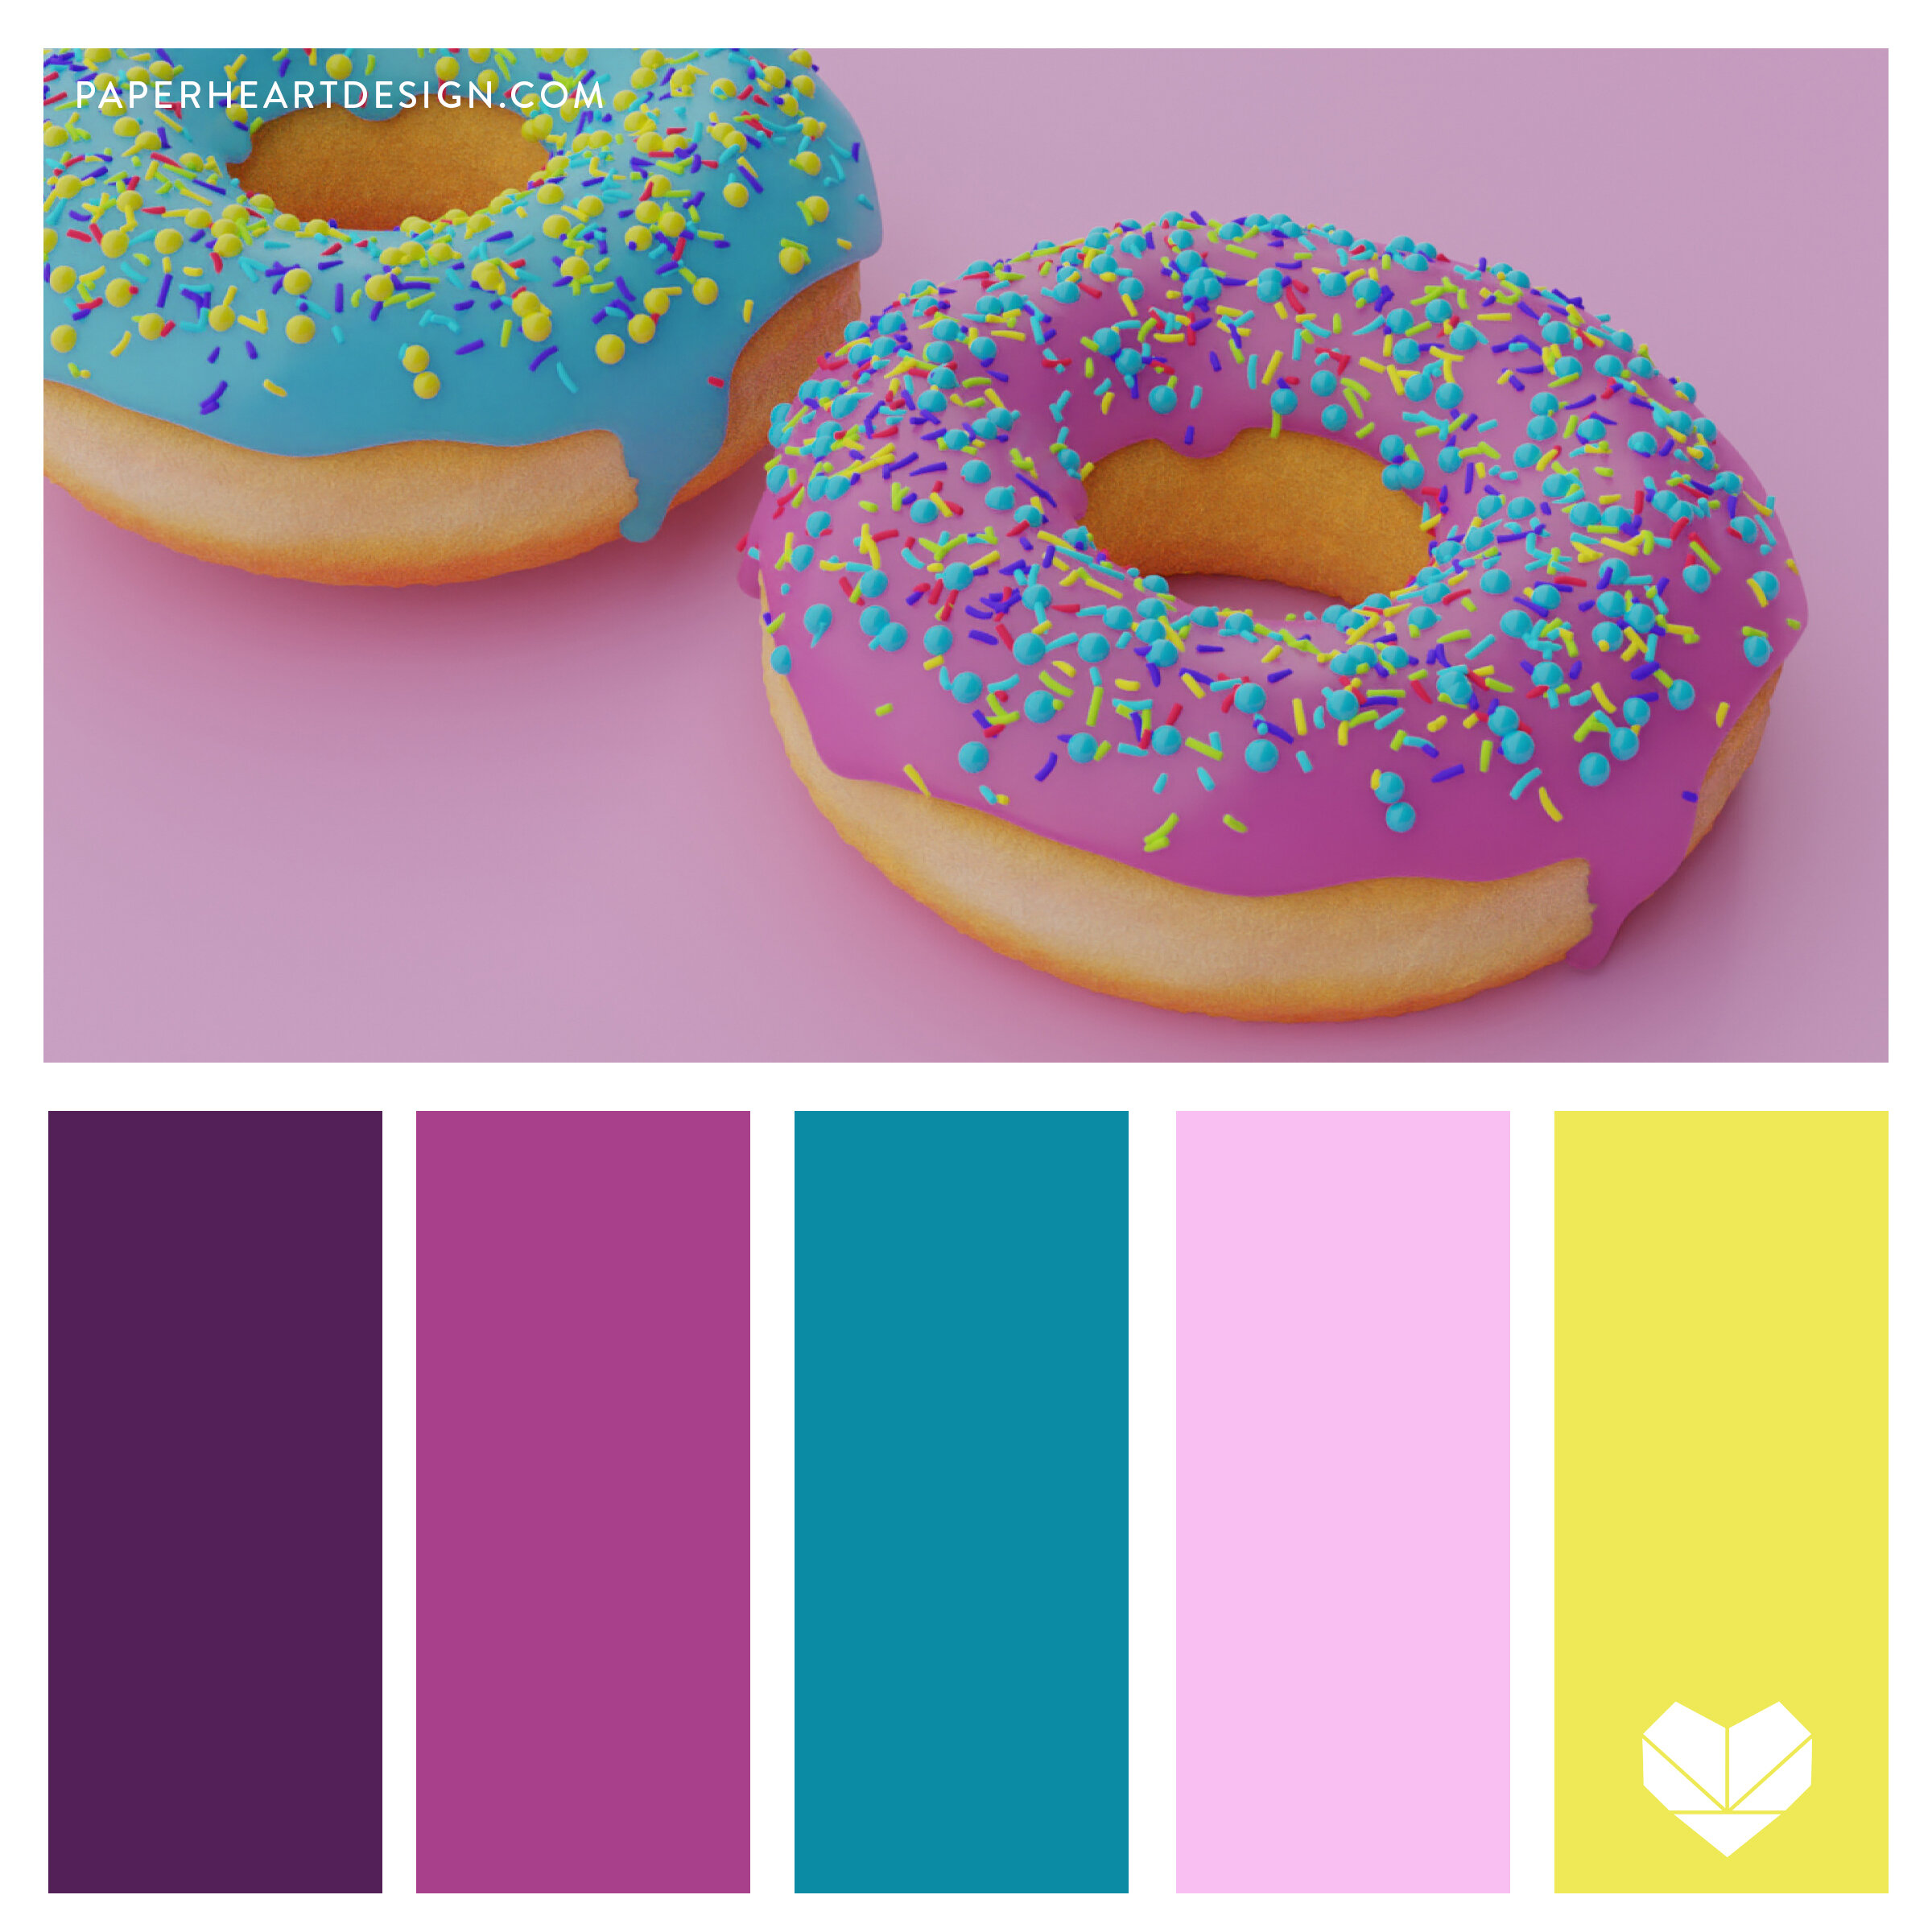 Donuts SQ.jpg